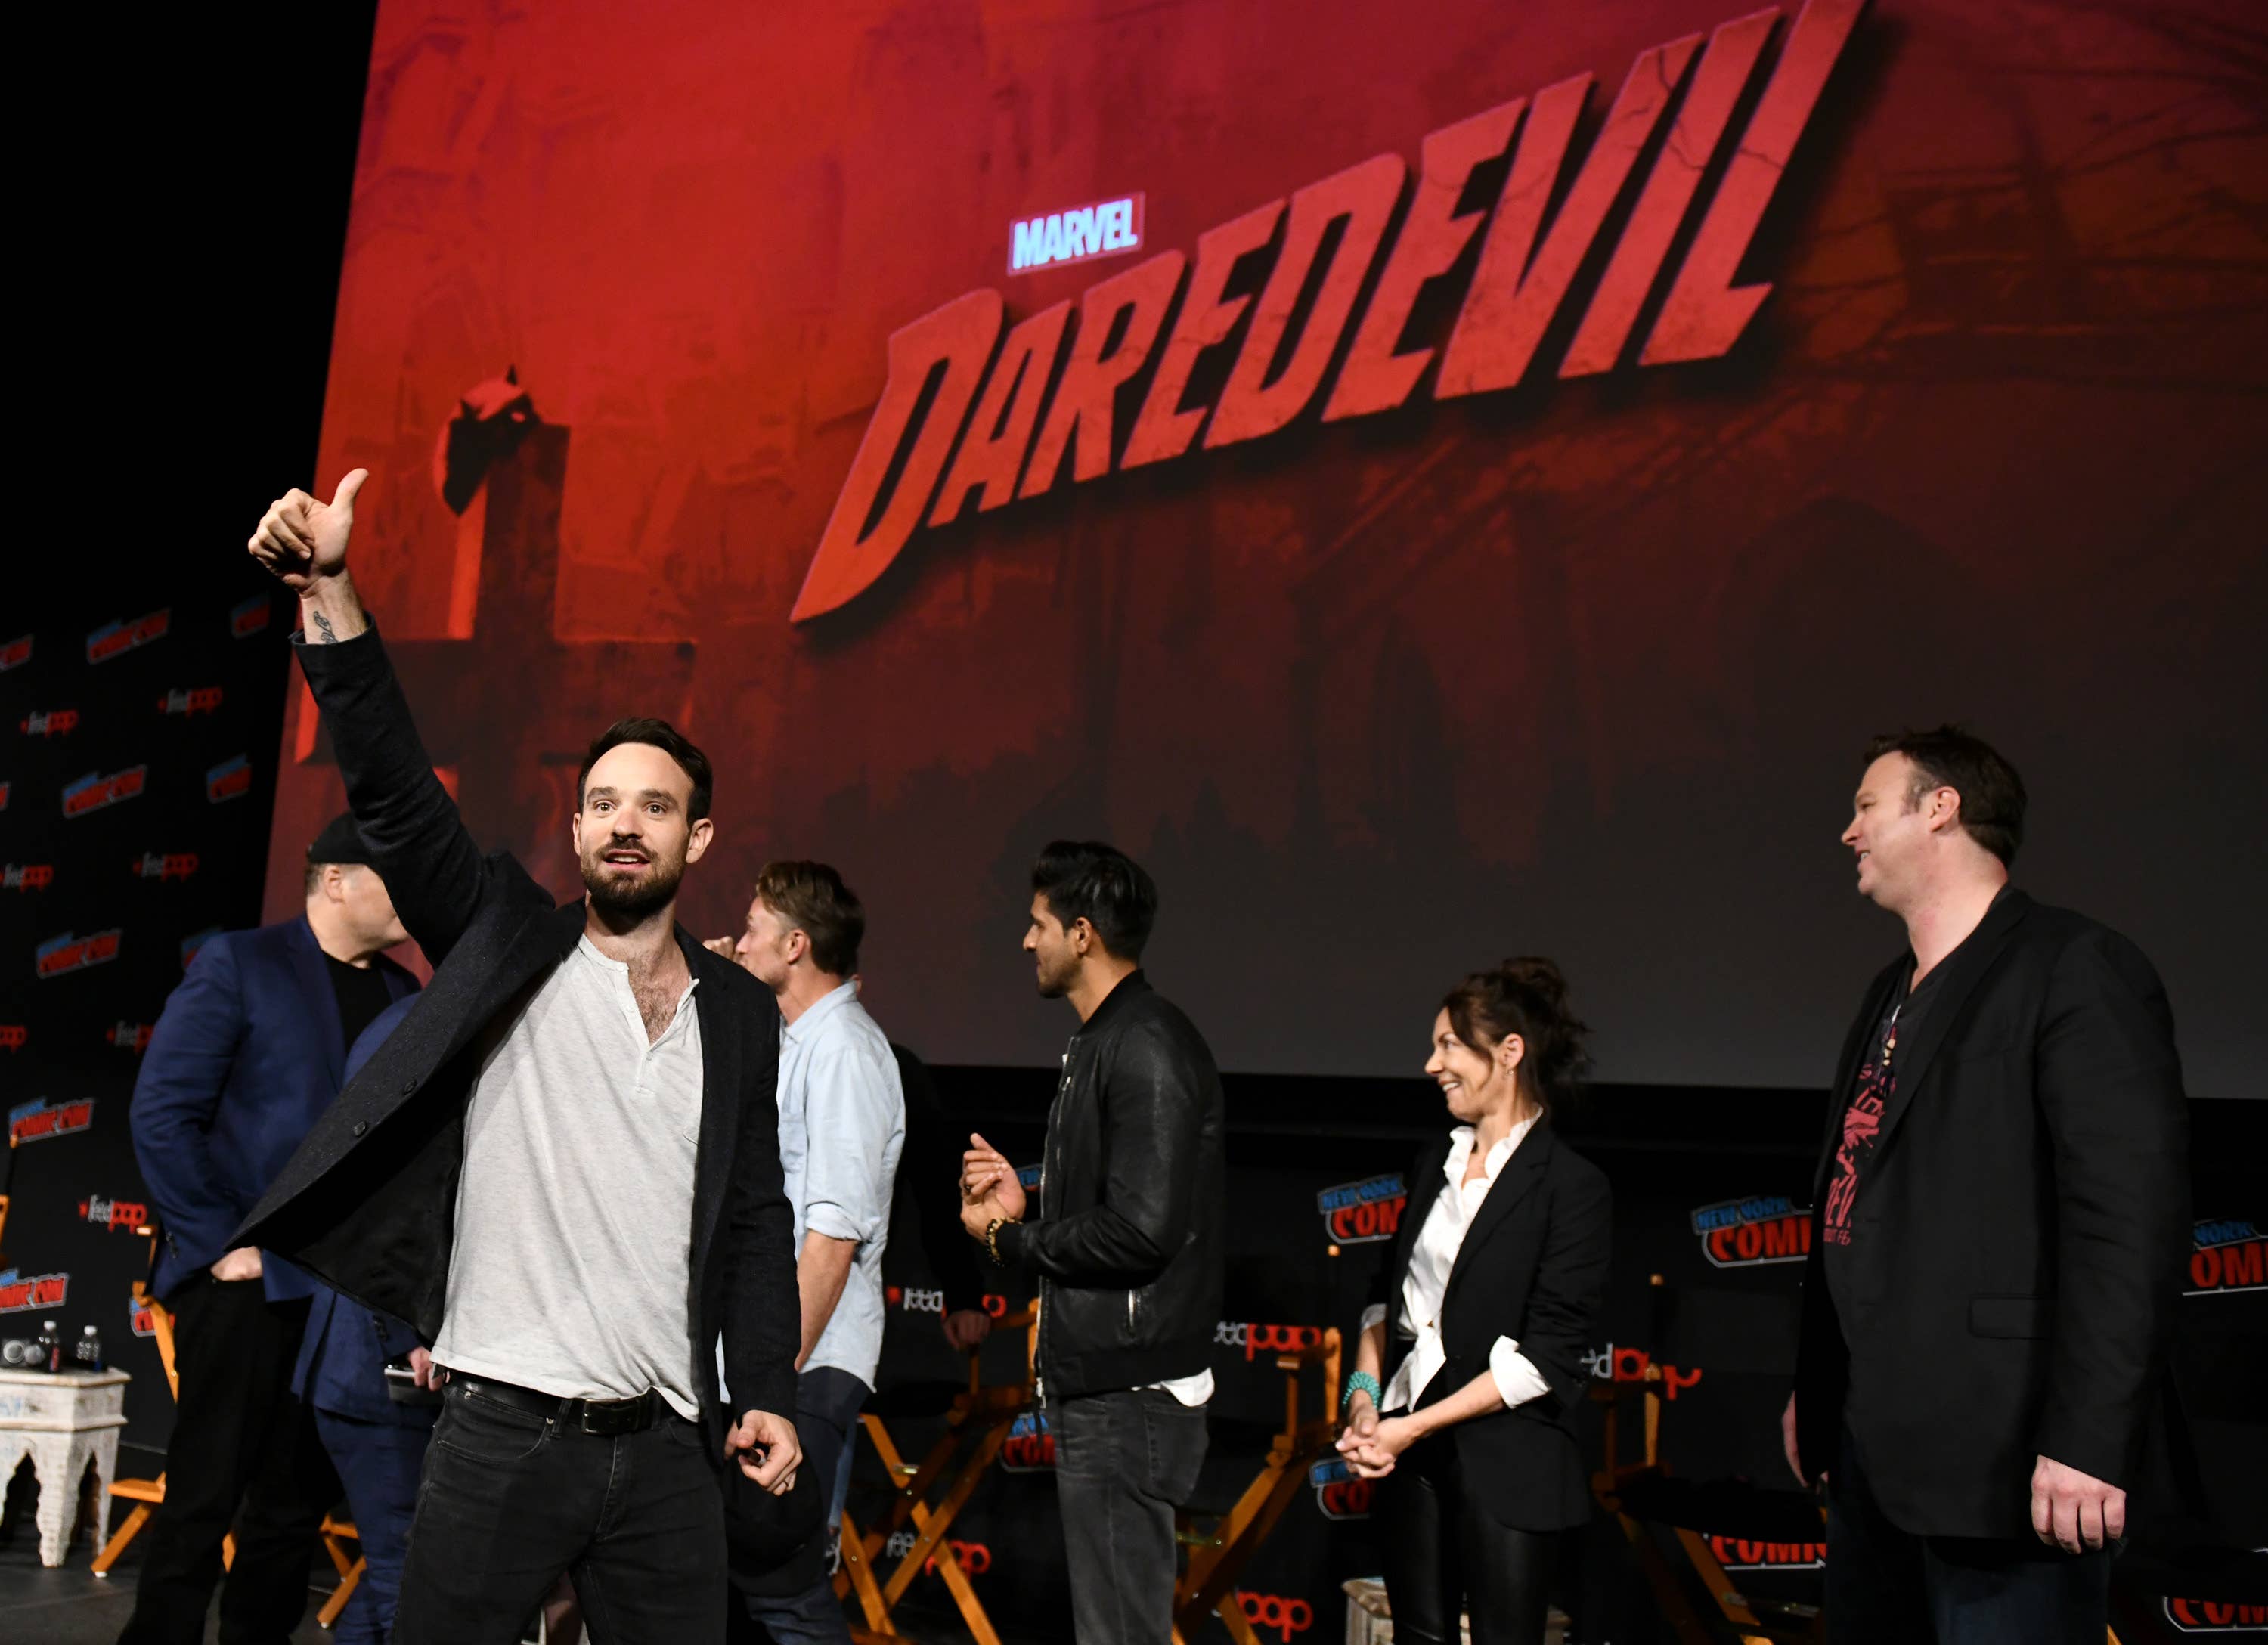 'Marvel's Daredevil' panel during NYCC 2018